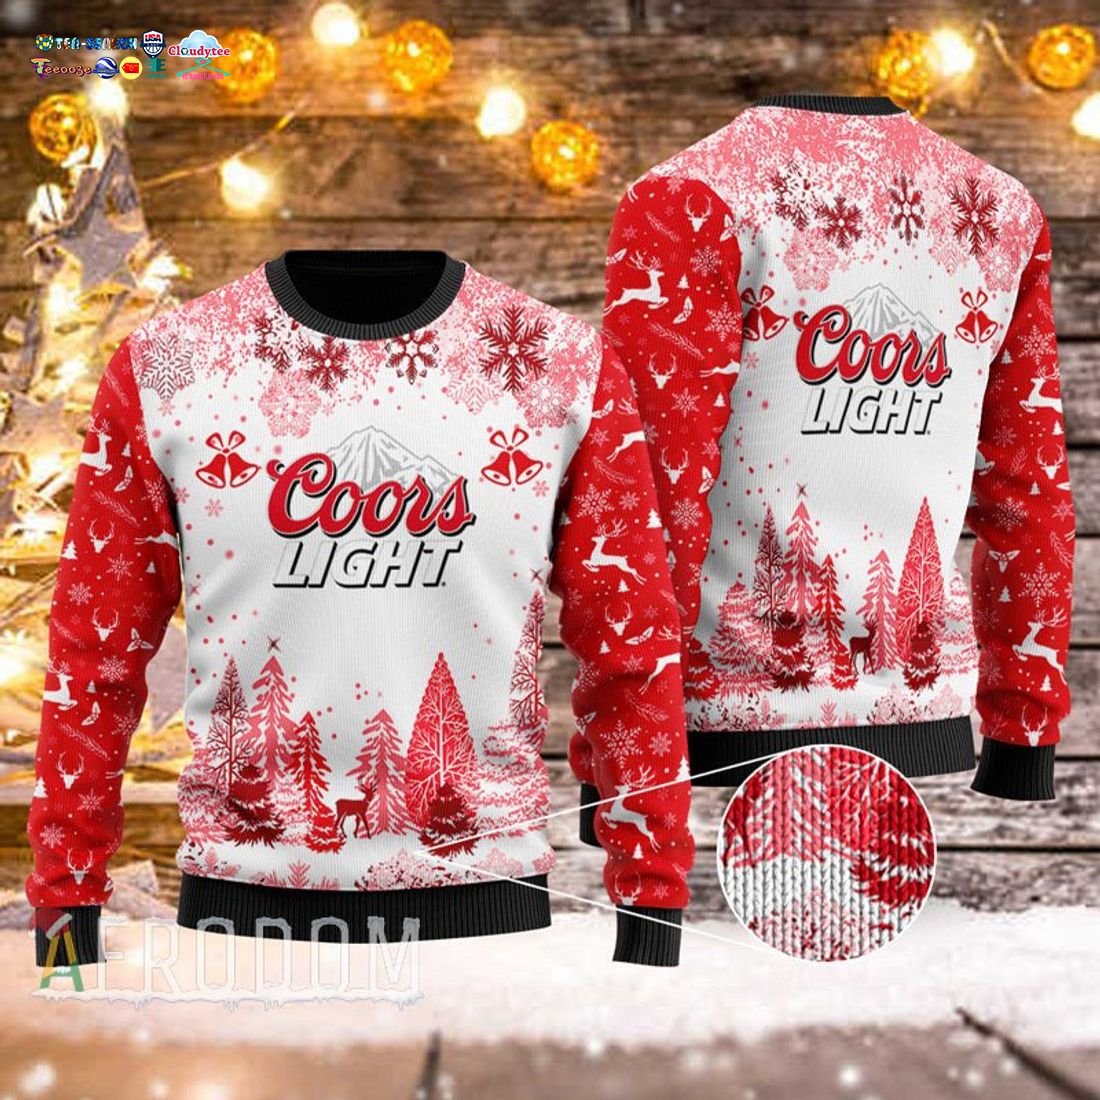 Coors Light Red Ver 3 Ugly Christmas Sweater - Nice shot bro